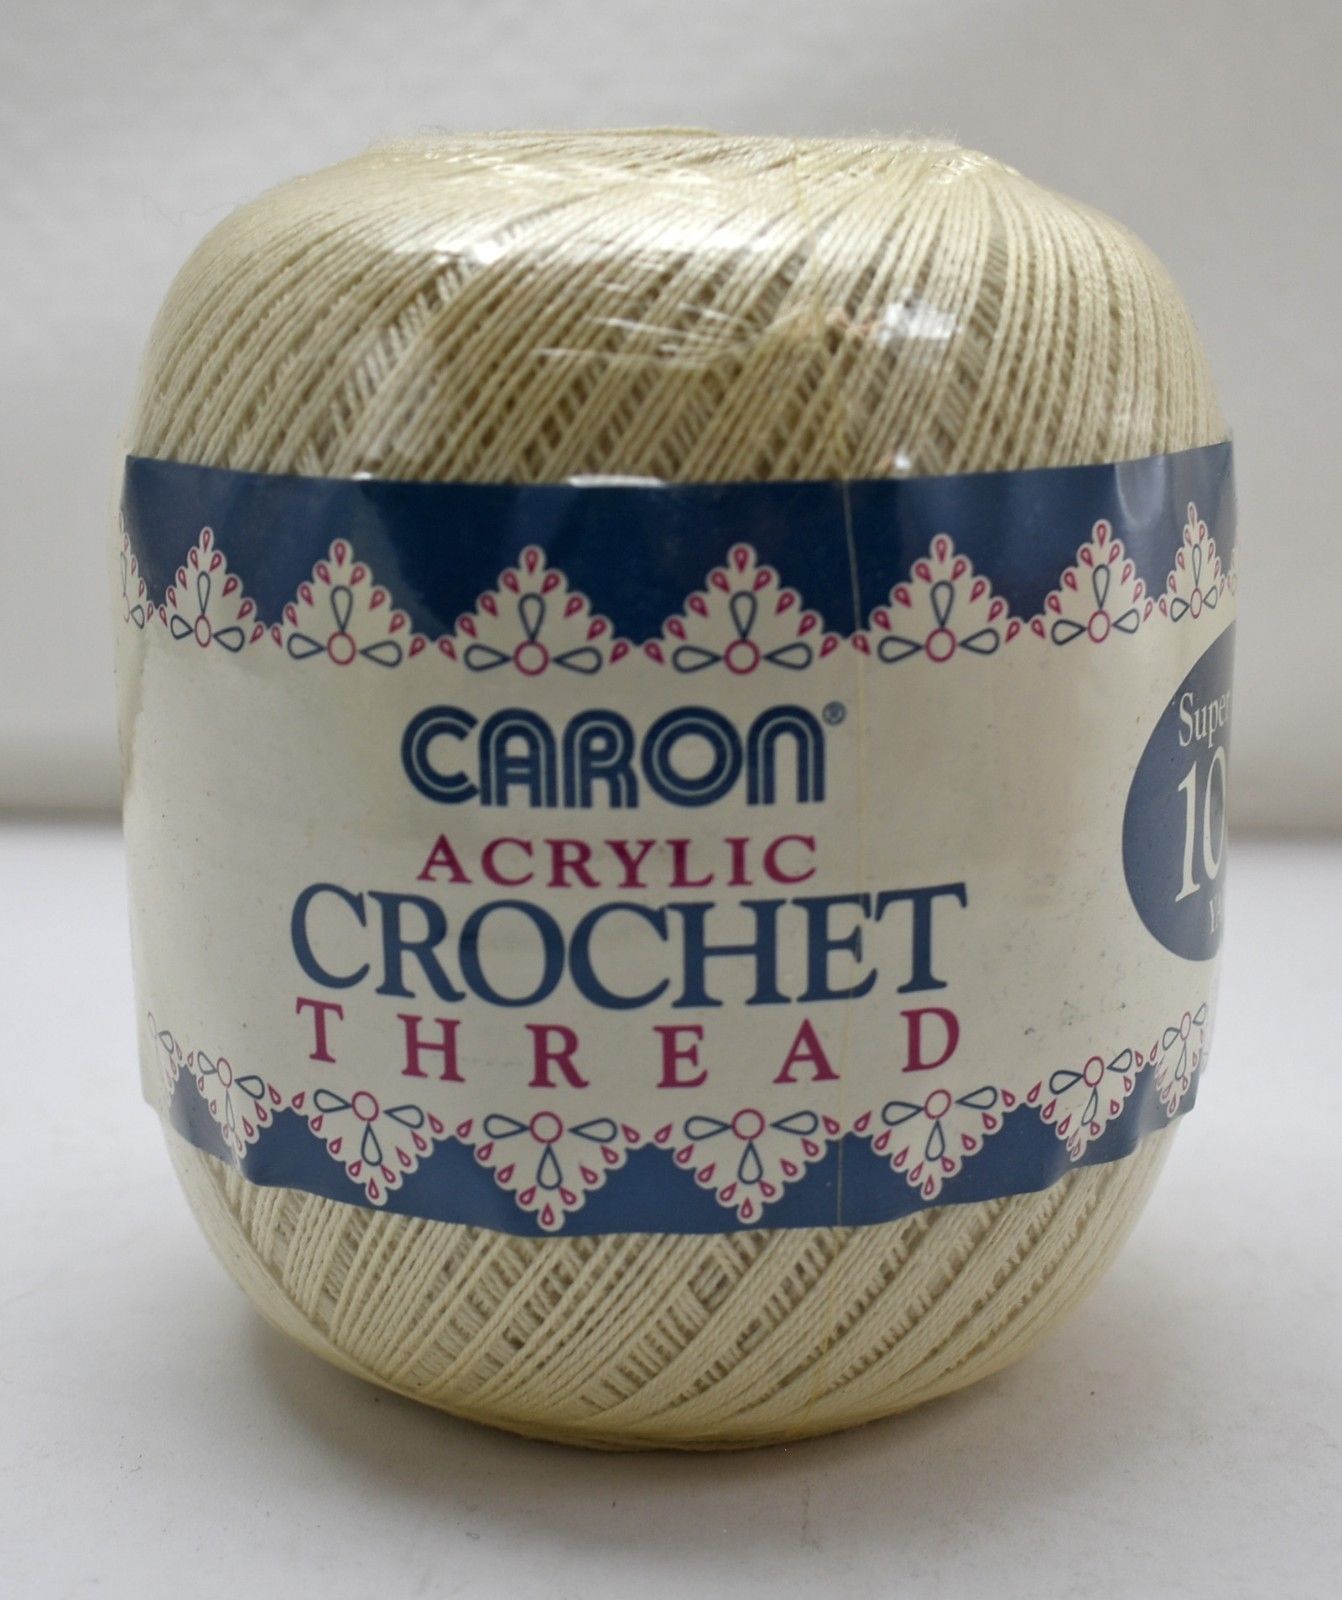 Caron Acrylic Crochet Thread - Size 10 - Super Value 1000 Yards Color Ecru #0160 - $5.65